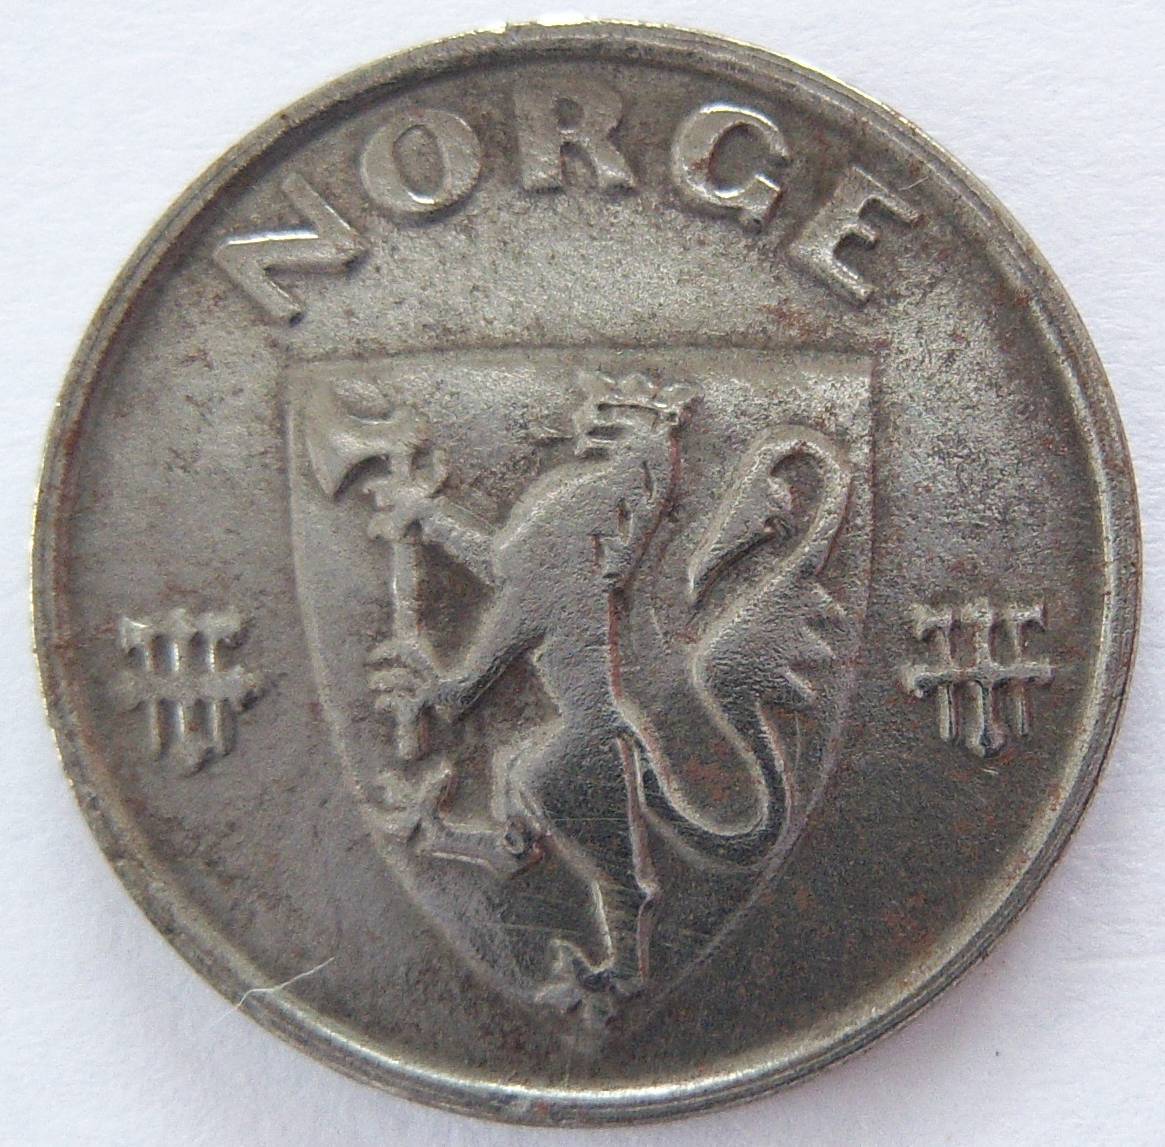  Norwegen 2 Öre 1943 Eisen   